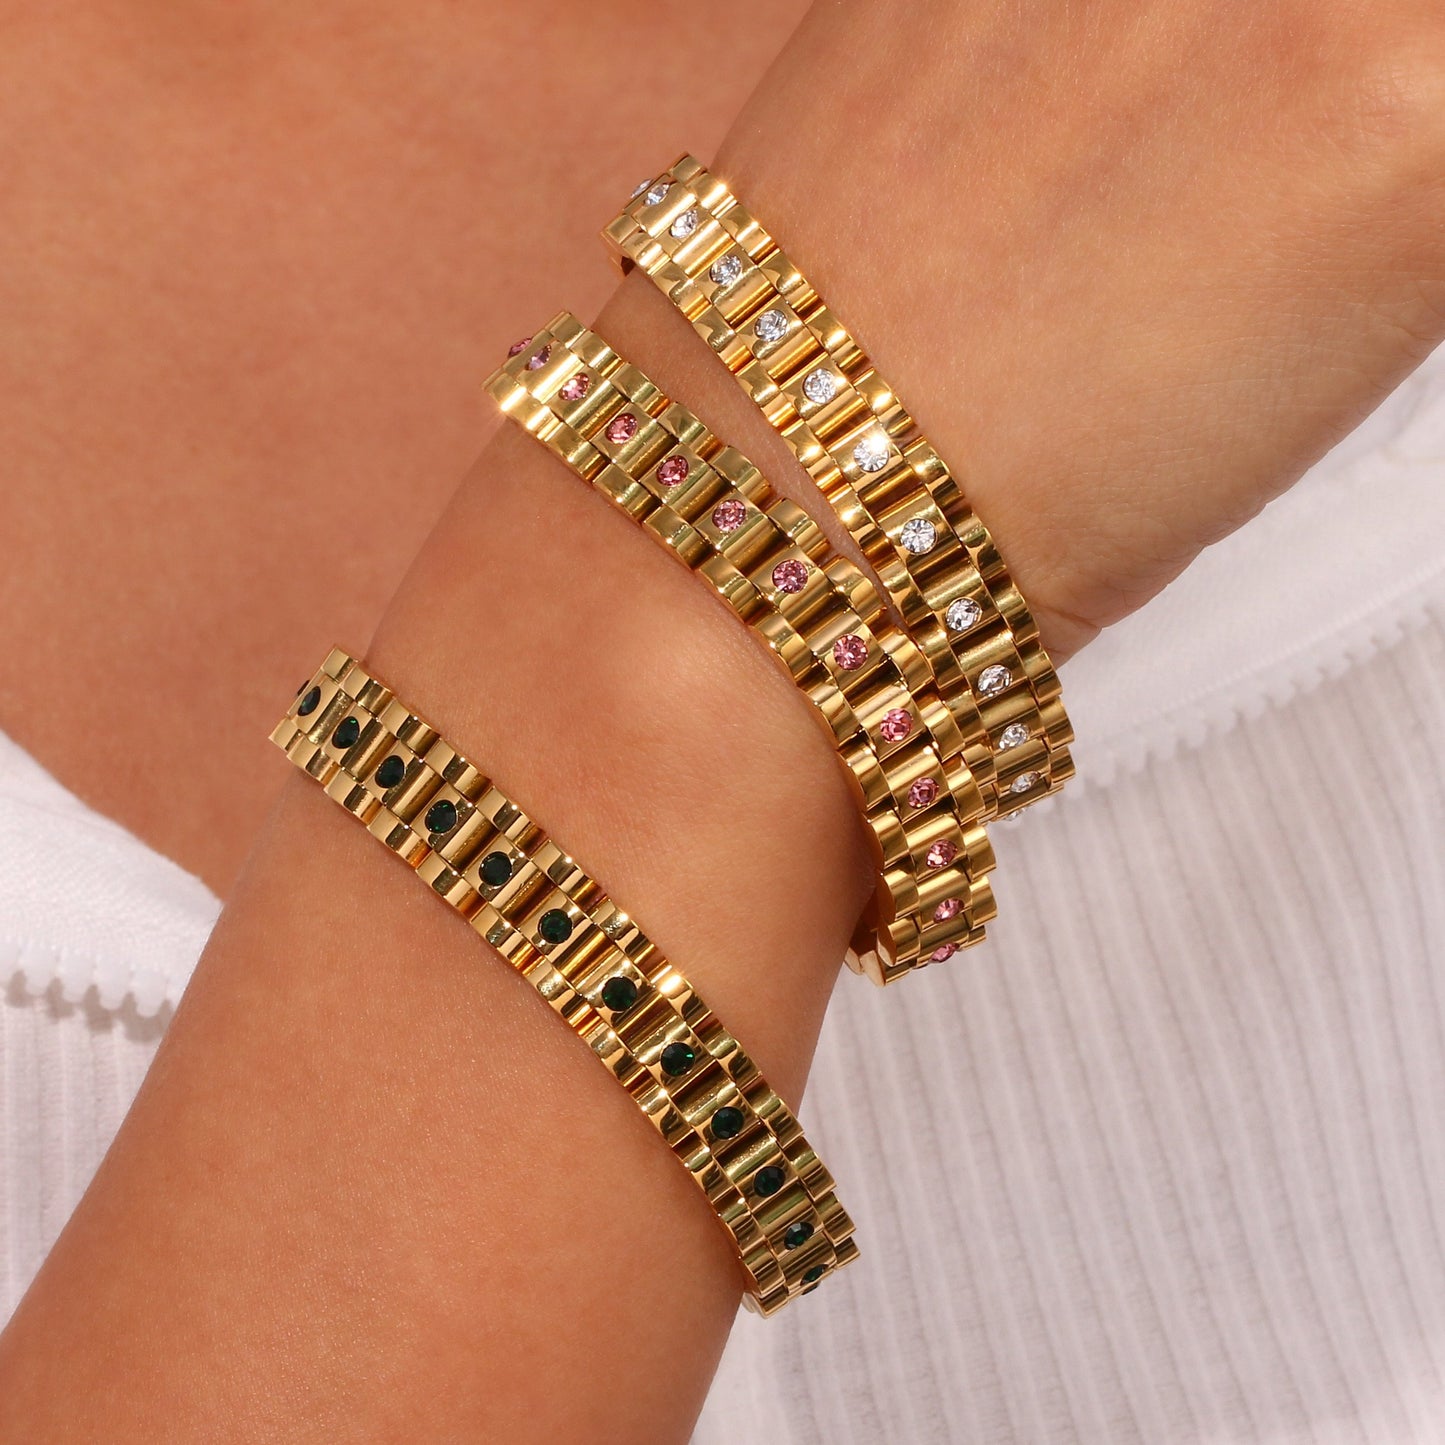 A model wearing the CZ Watchband Gold Bracelet.